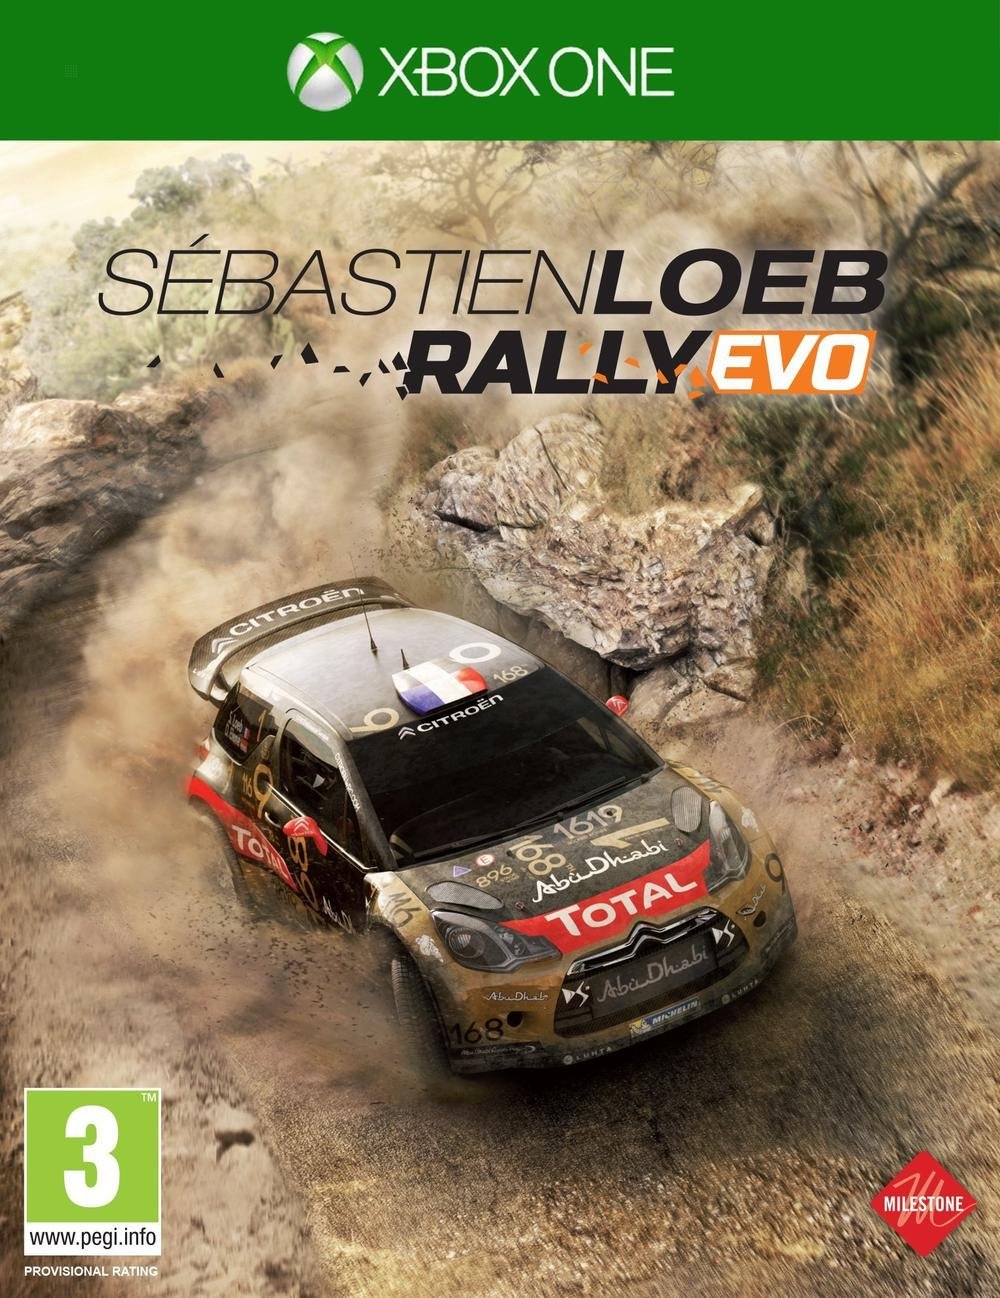 Sebastien Loeb Rally Evo (Xbox One), Milestone